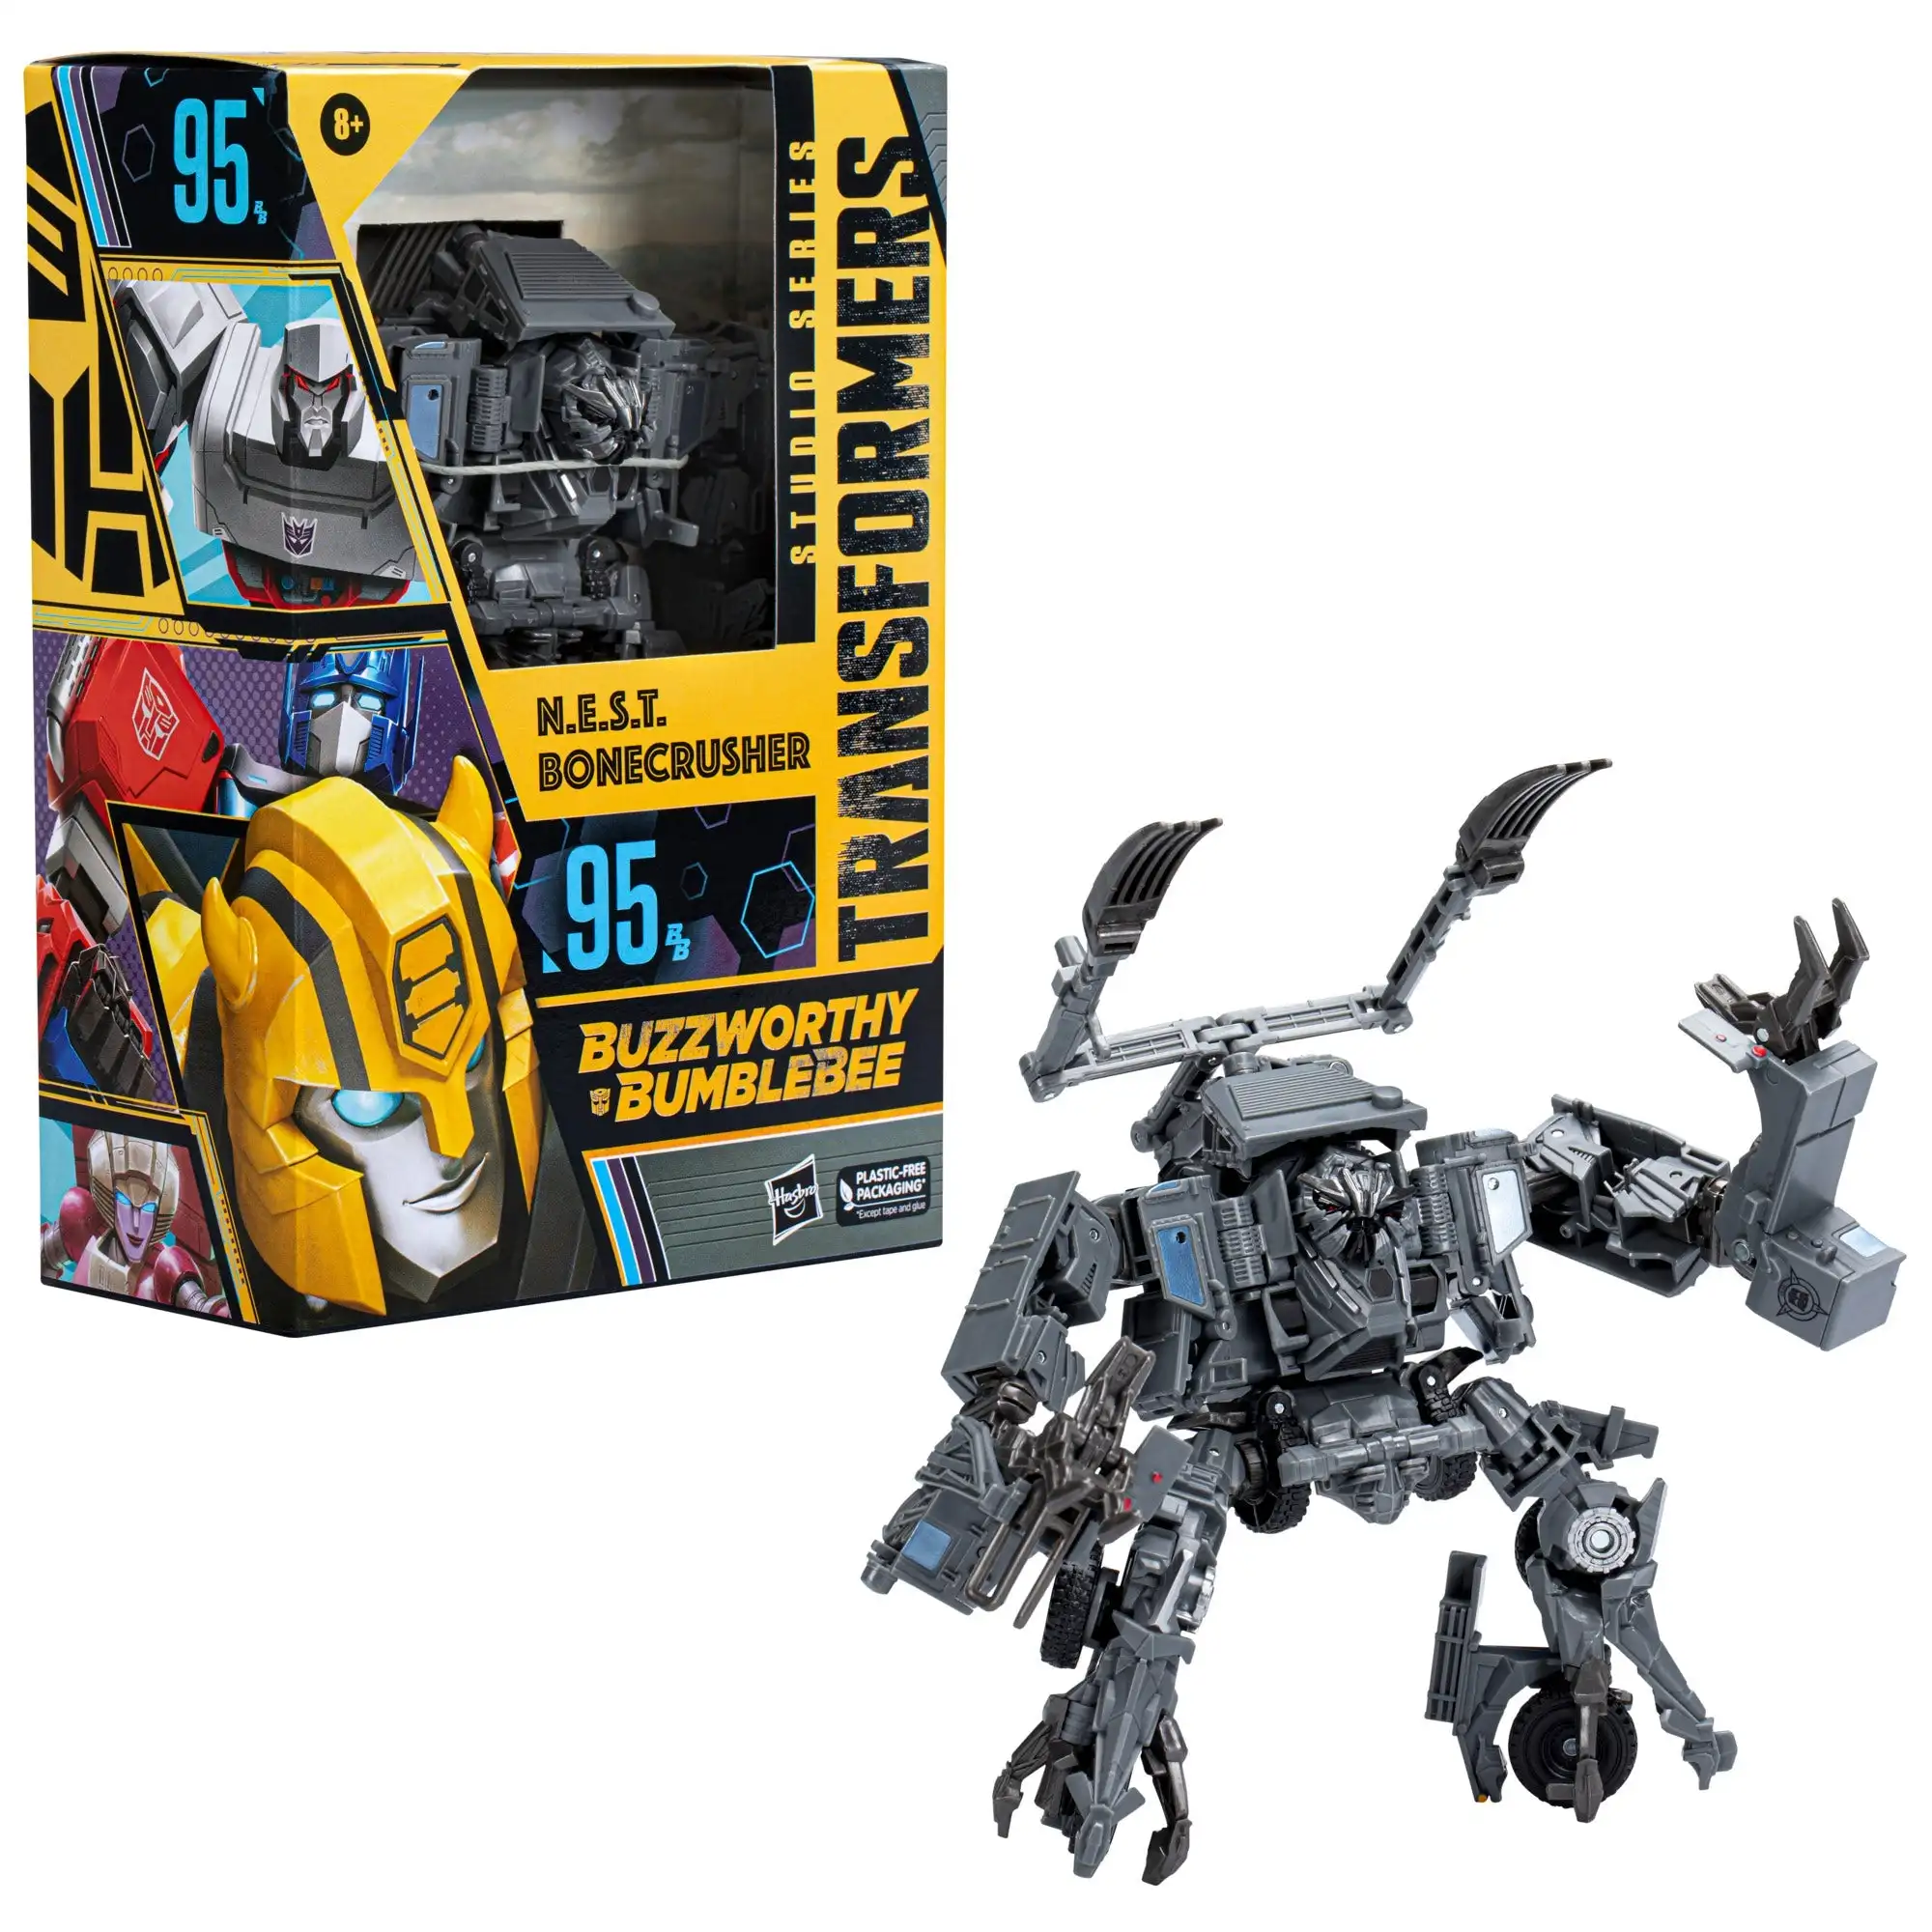 

【Pre-Order】2202/12/30 Hasbro Transformers Buzzworthy Bumblebee Studio Series 95BB N.E.S.T. Bonecrusher Toys Gift F7116